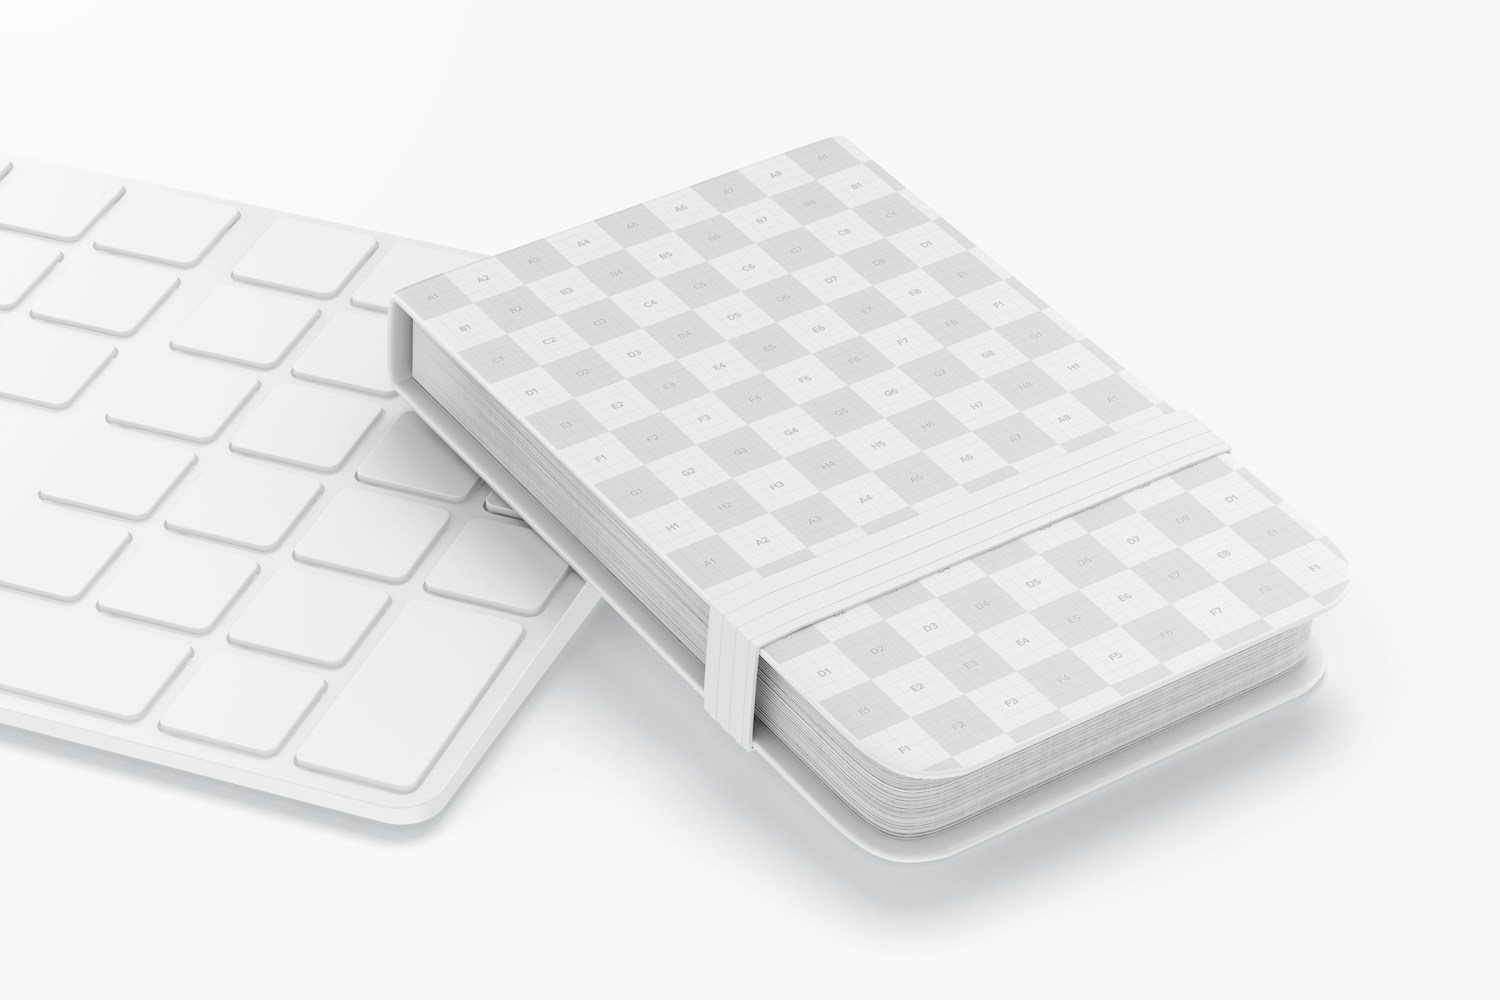 Mini Notebook with Elastic Band with Keyboard Mockup